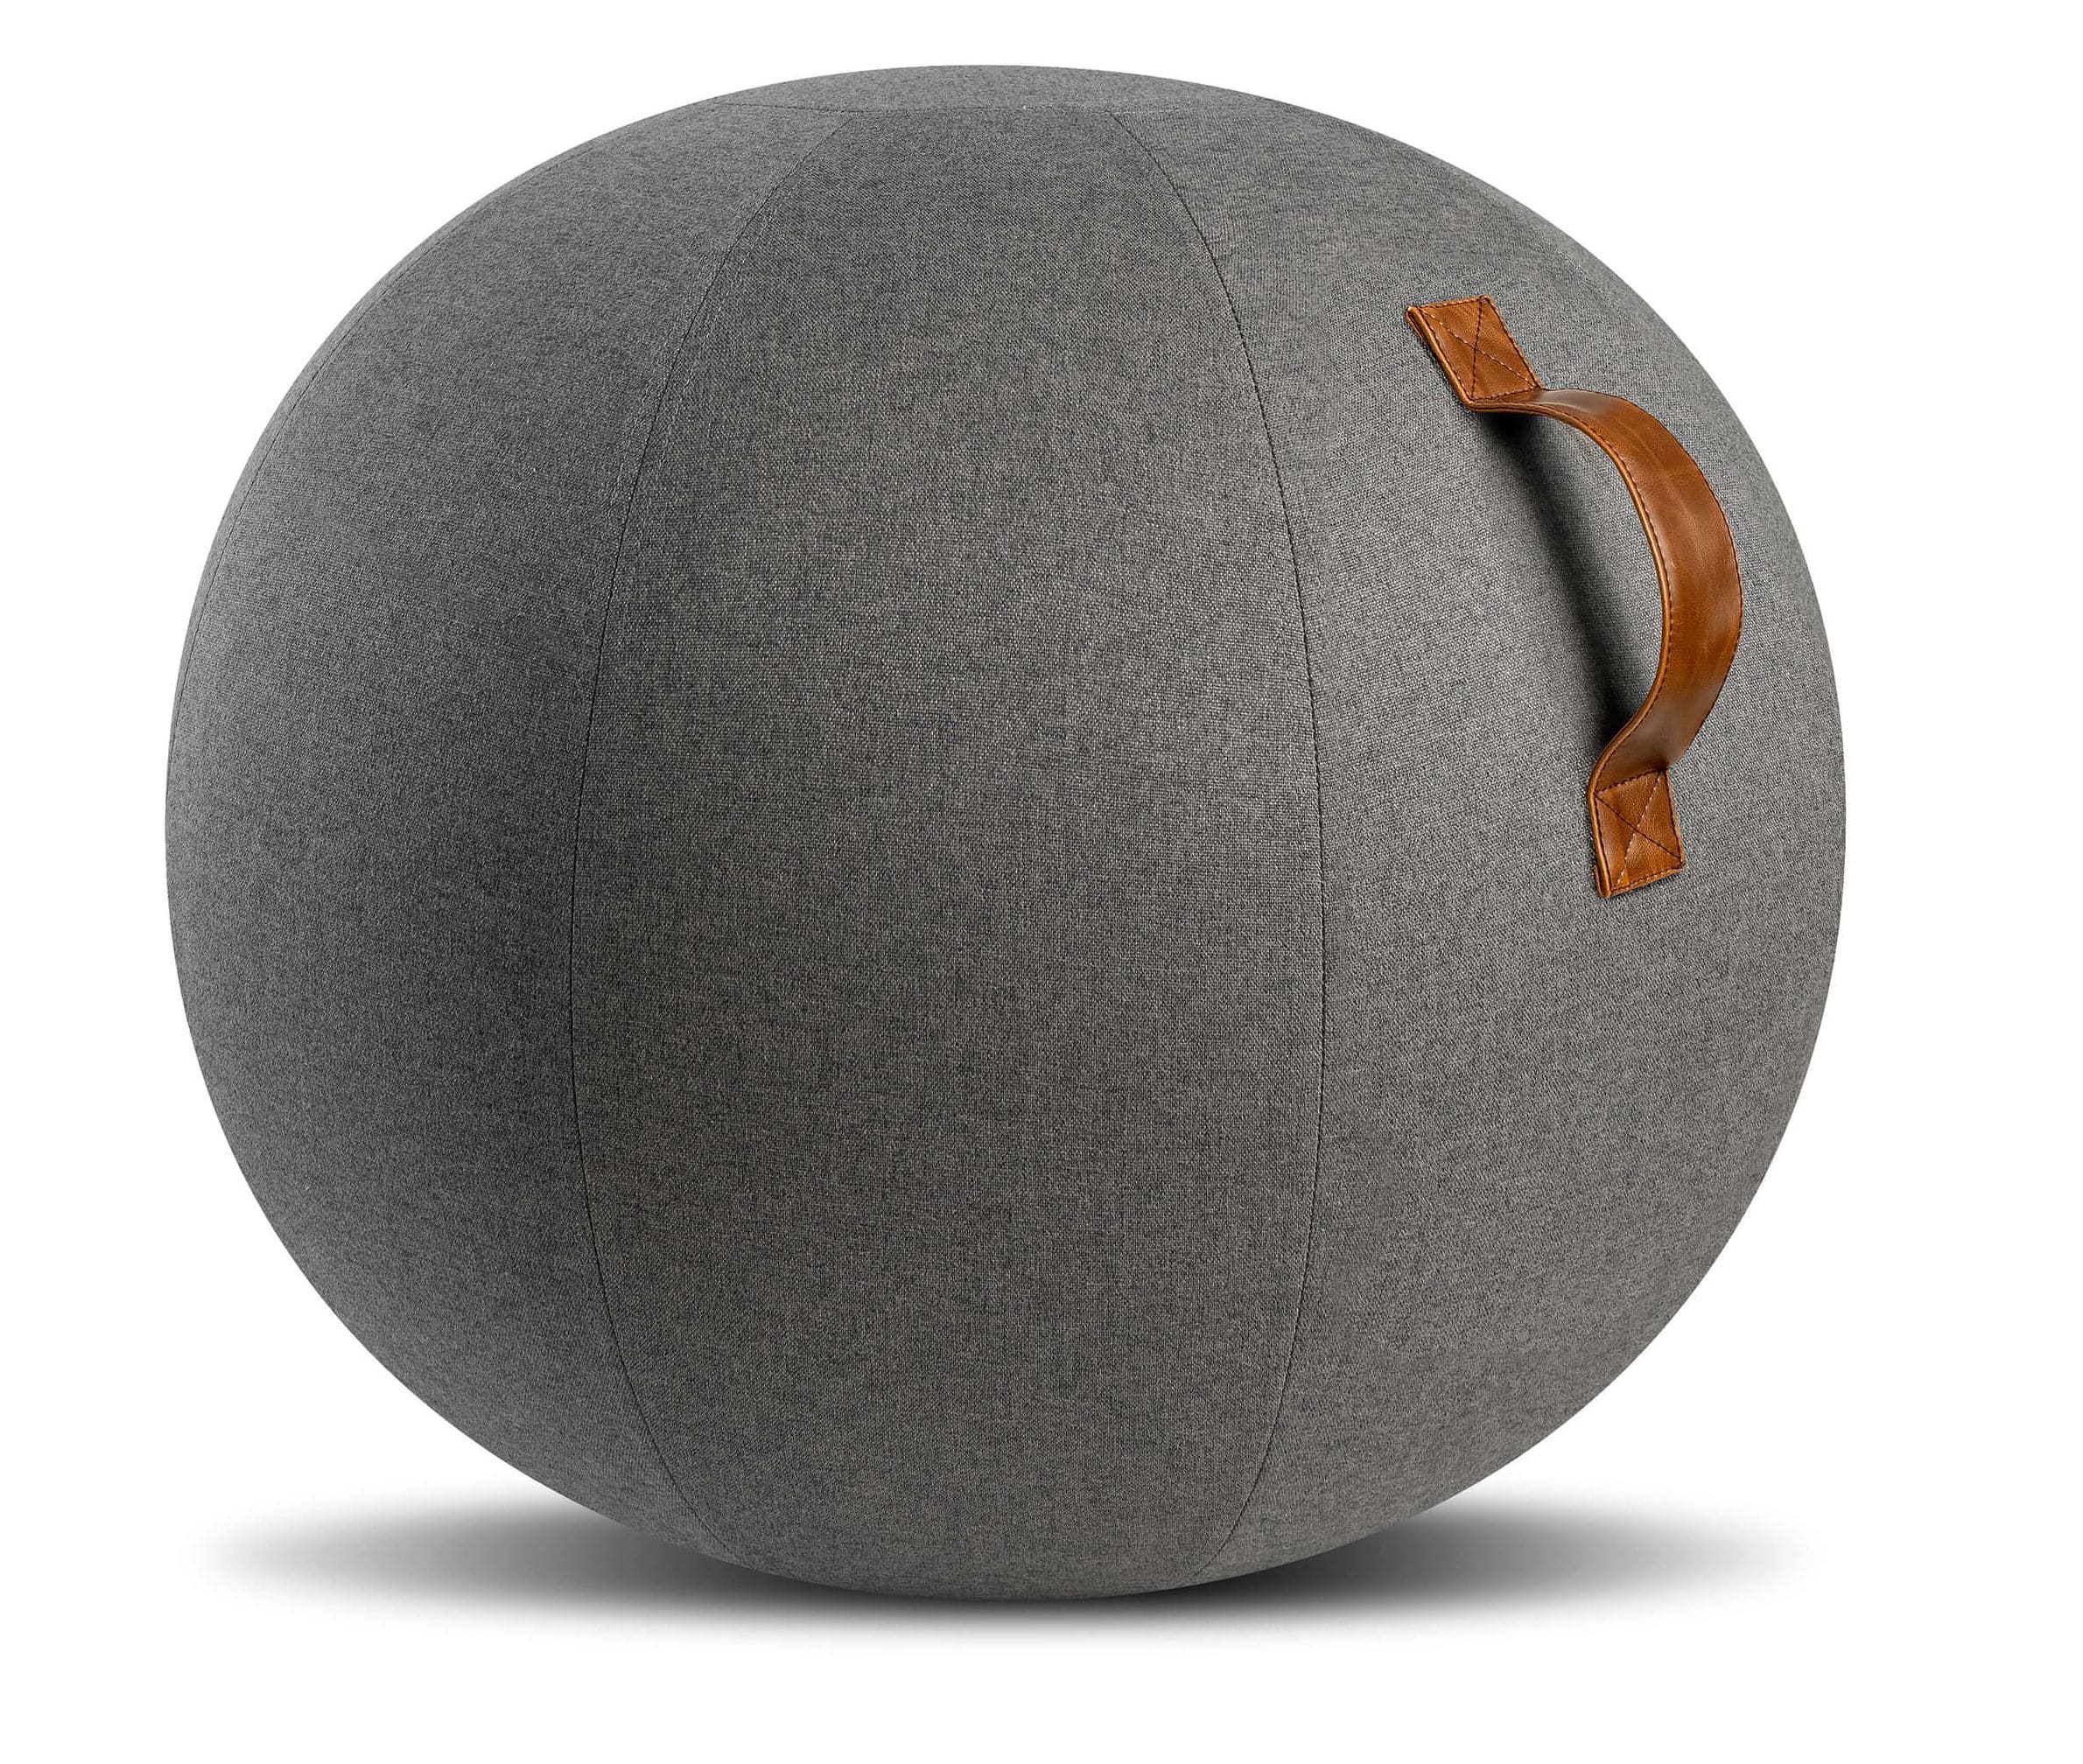 Gray balanceball design